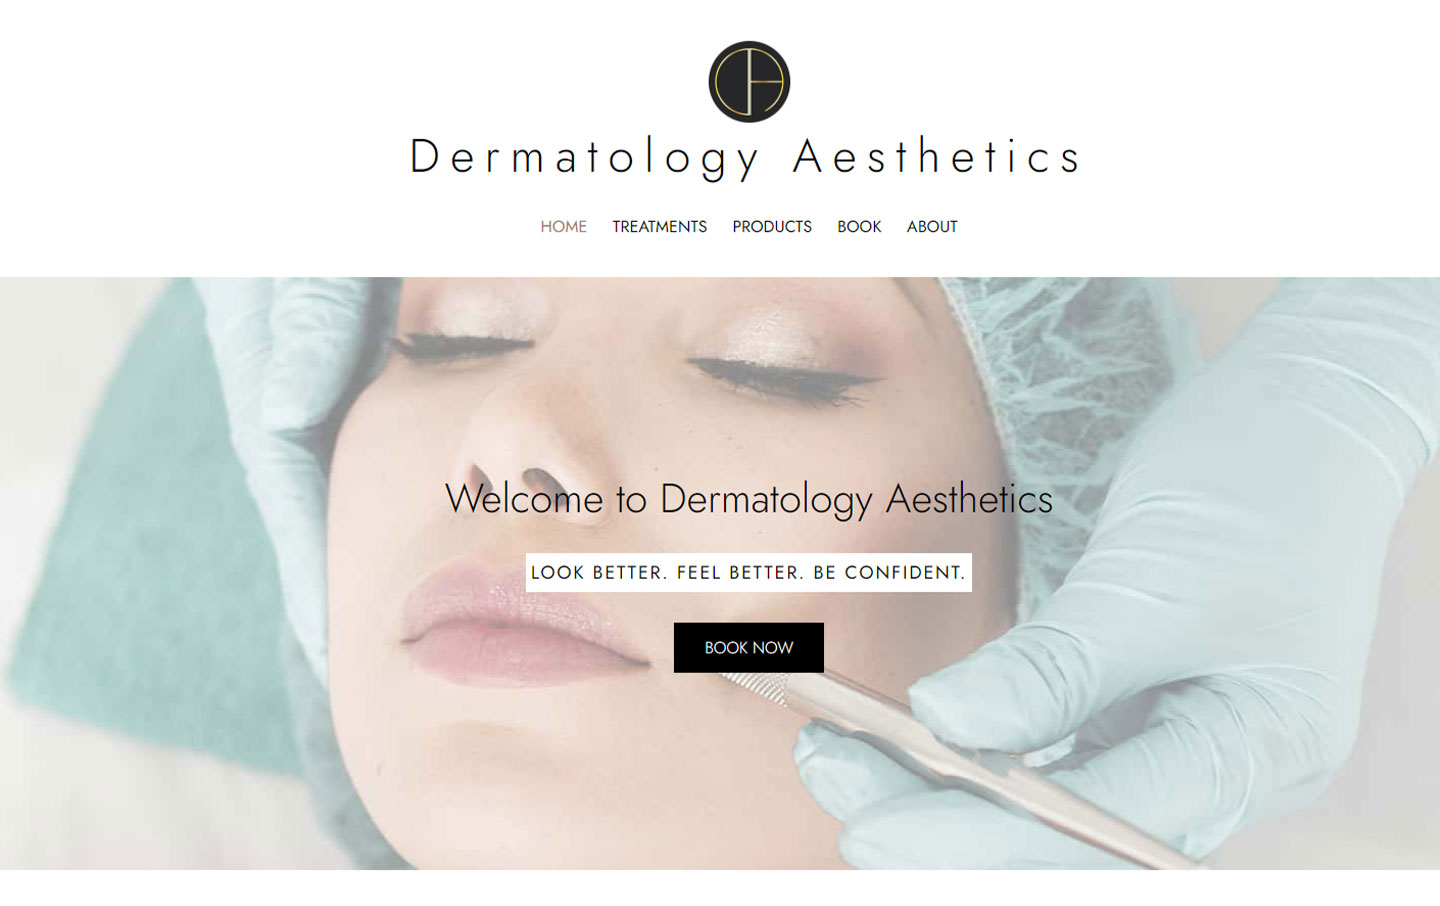 Dermatology Aesthetics website design